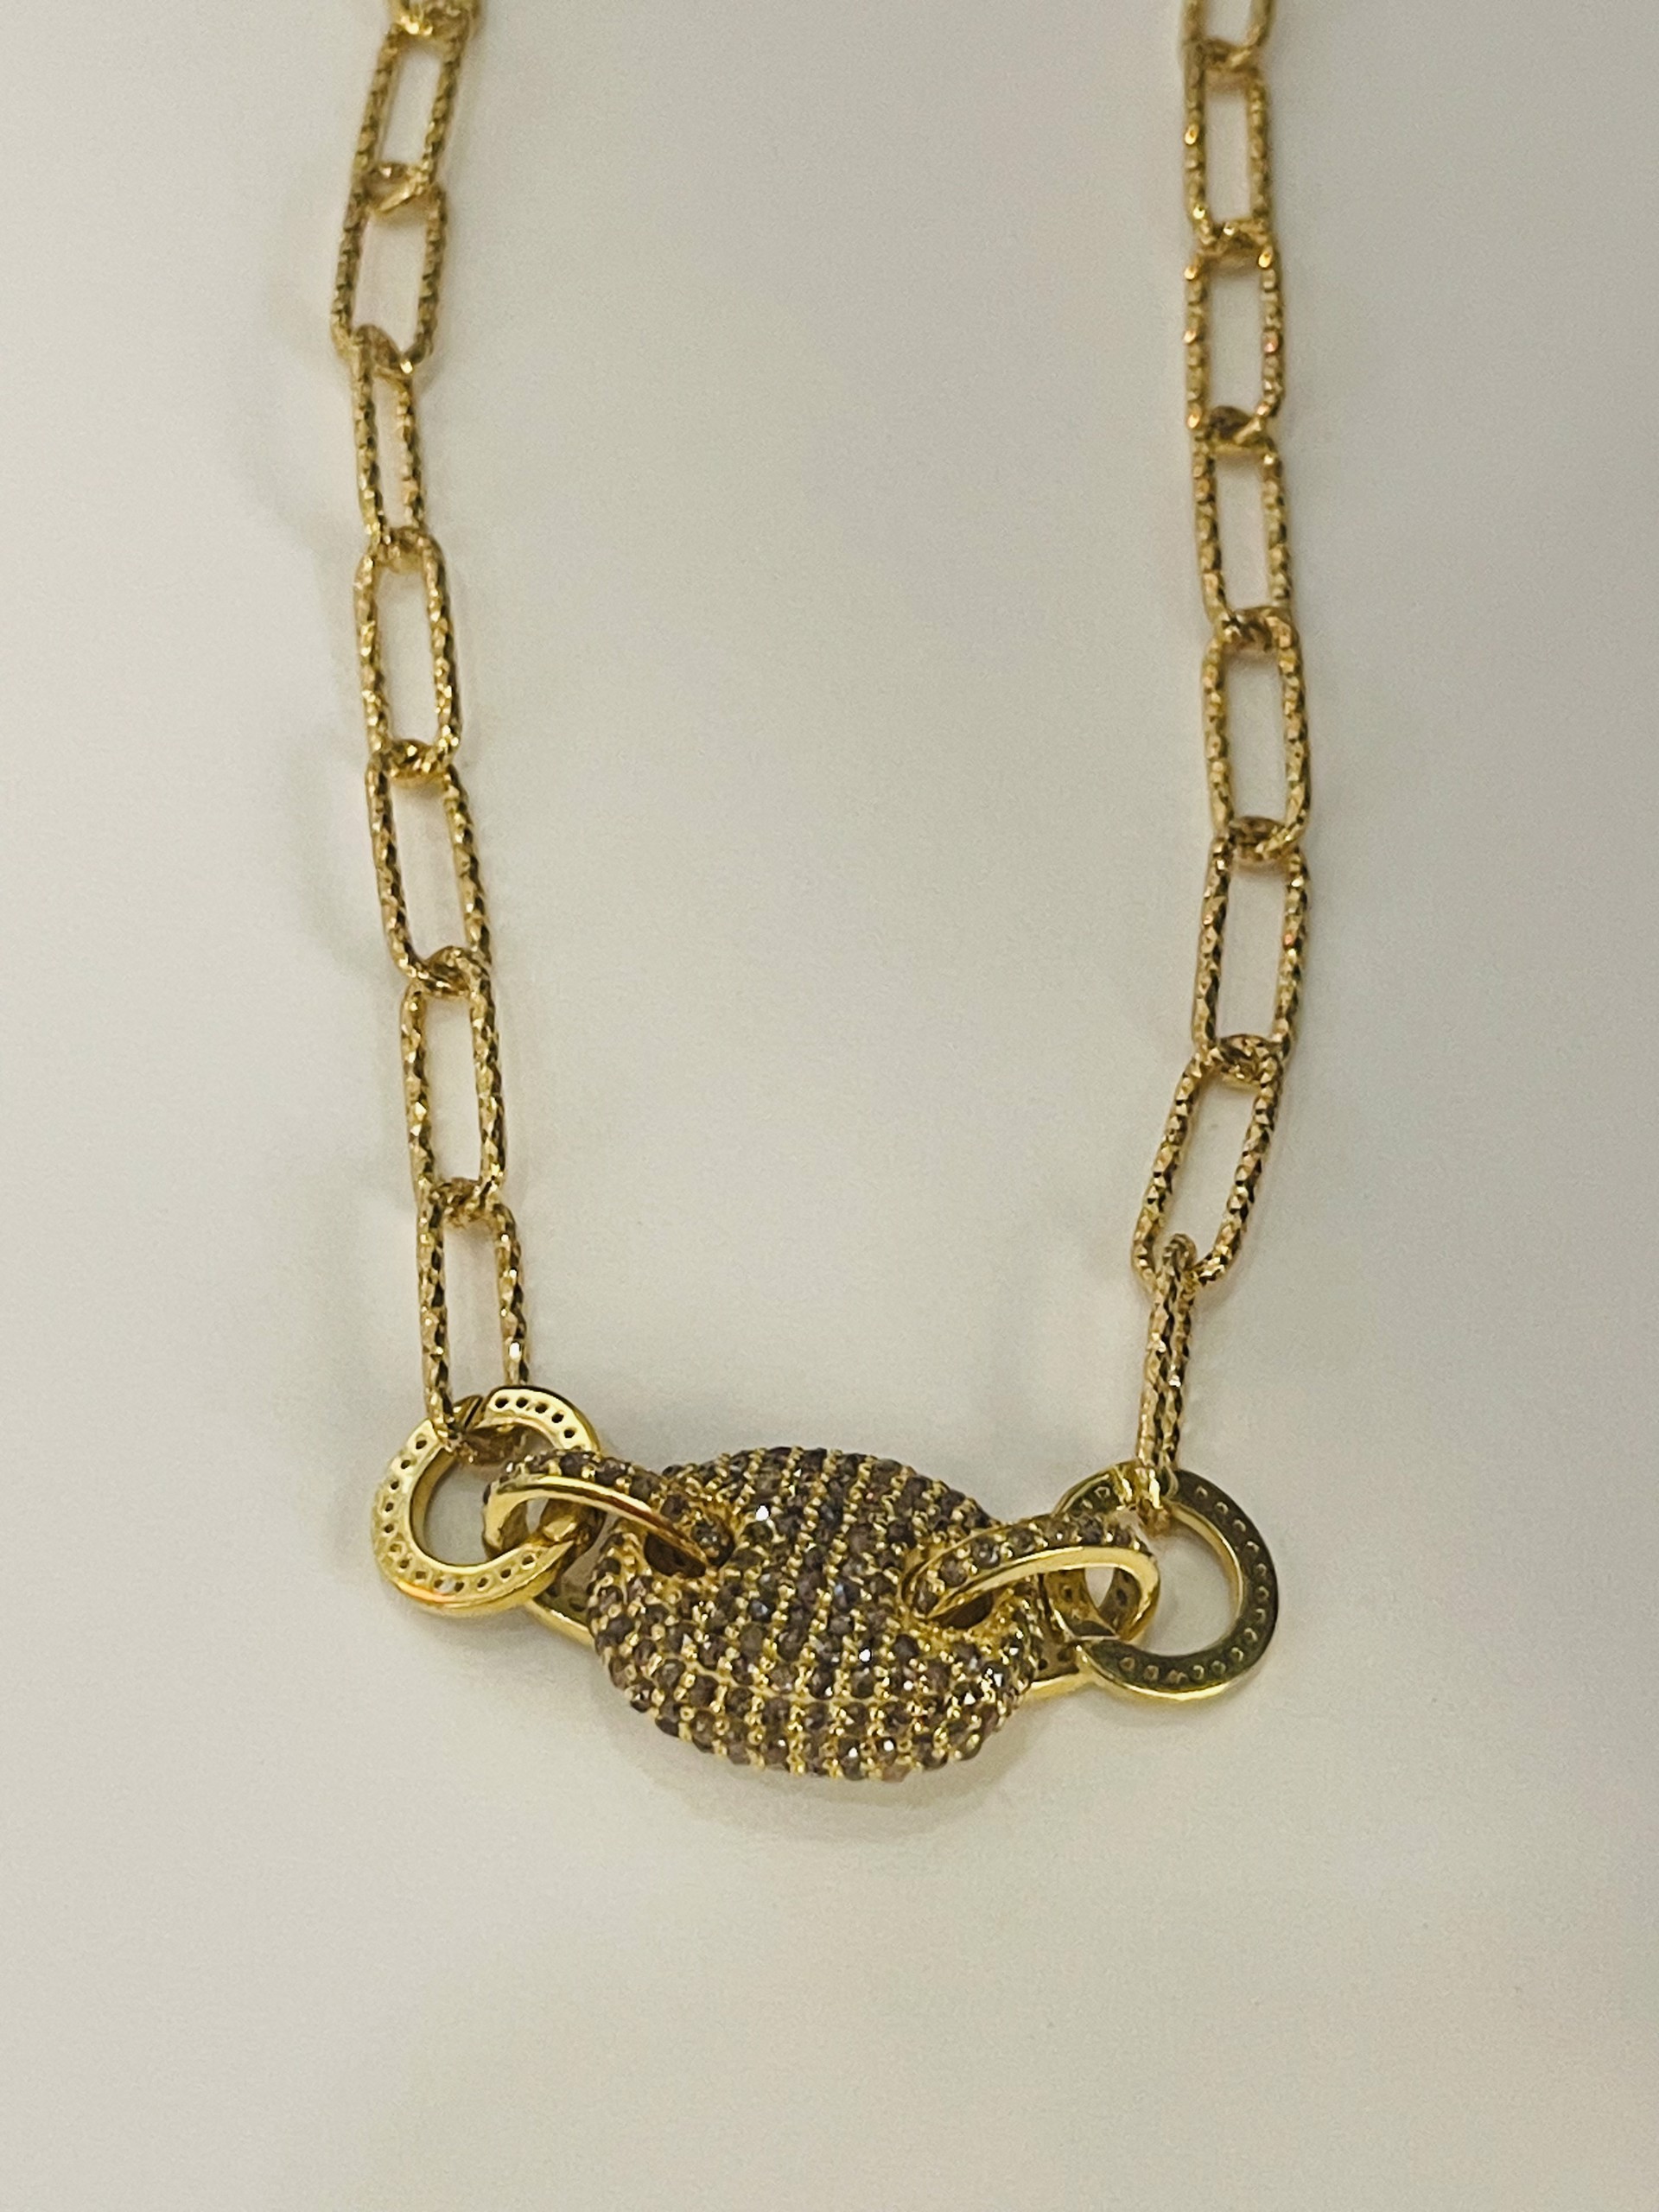 Pave Black Diamond Pendant Necklace by Karen Birchmier